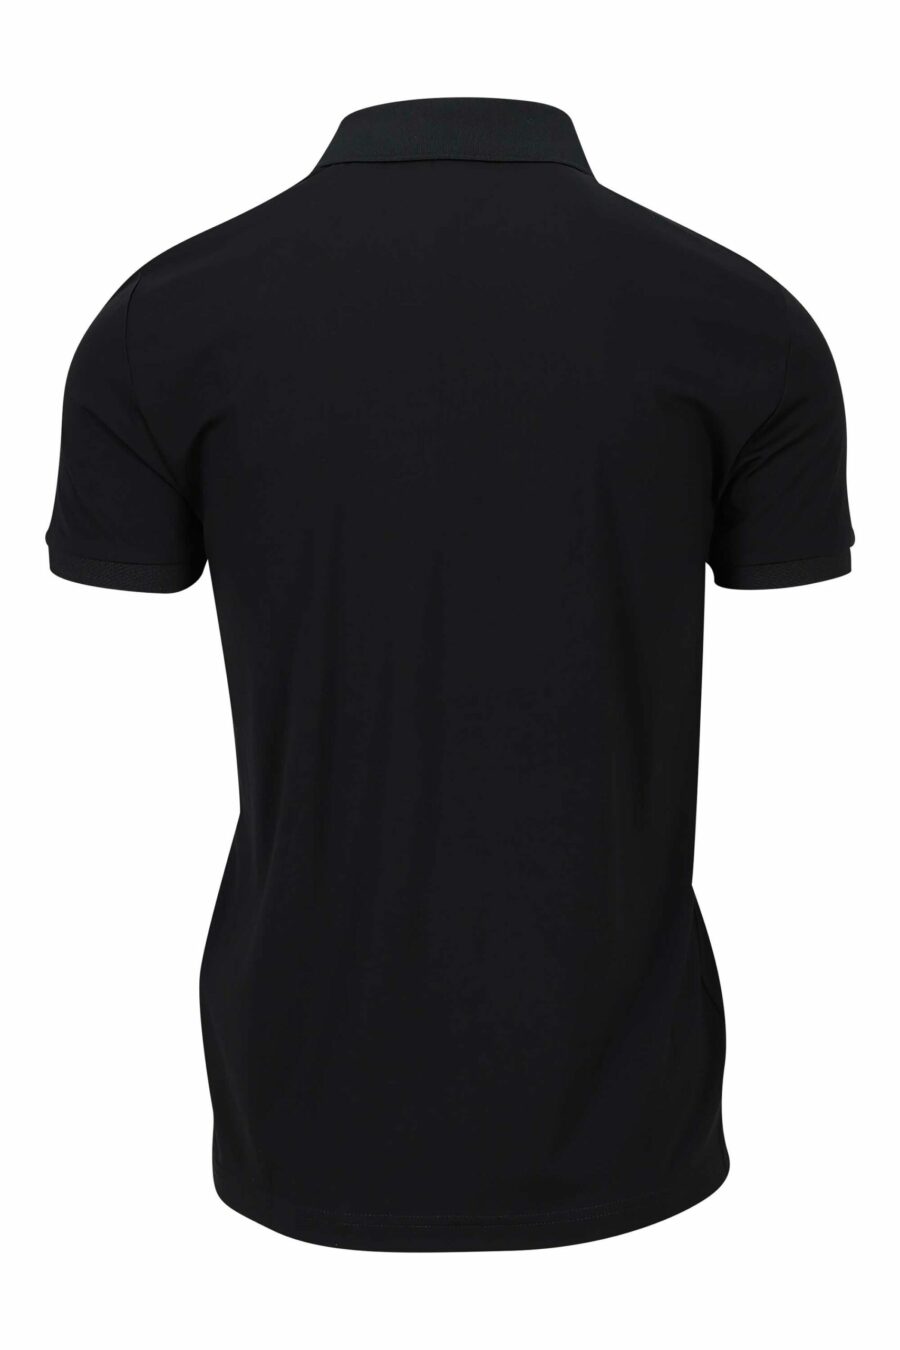 Schwarzes Poloshirt mit "lux identity" Mini-Logo - 8057767614805 1 skaliert